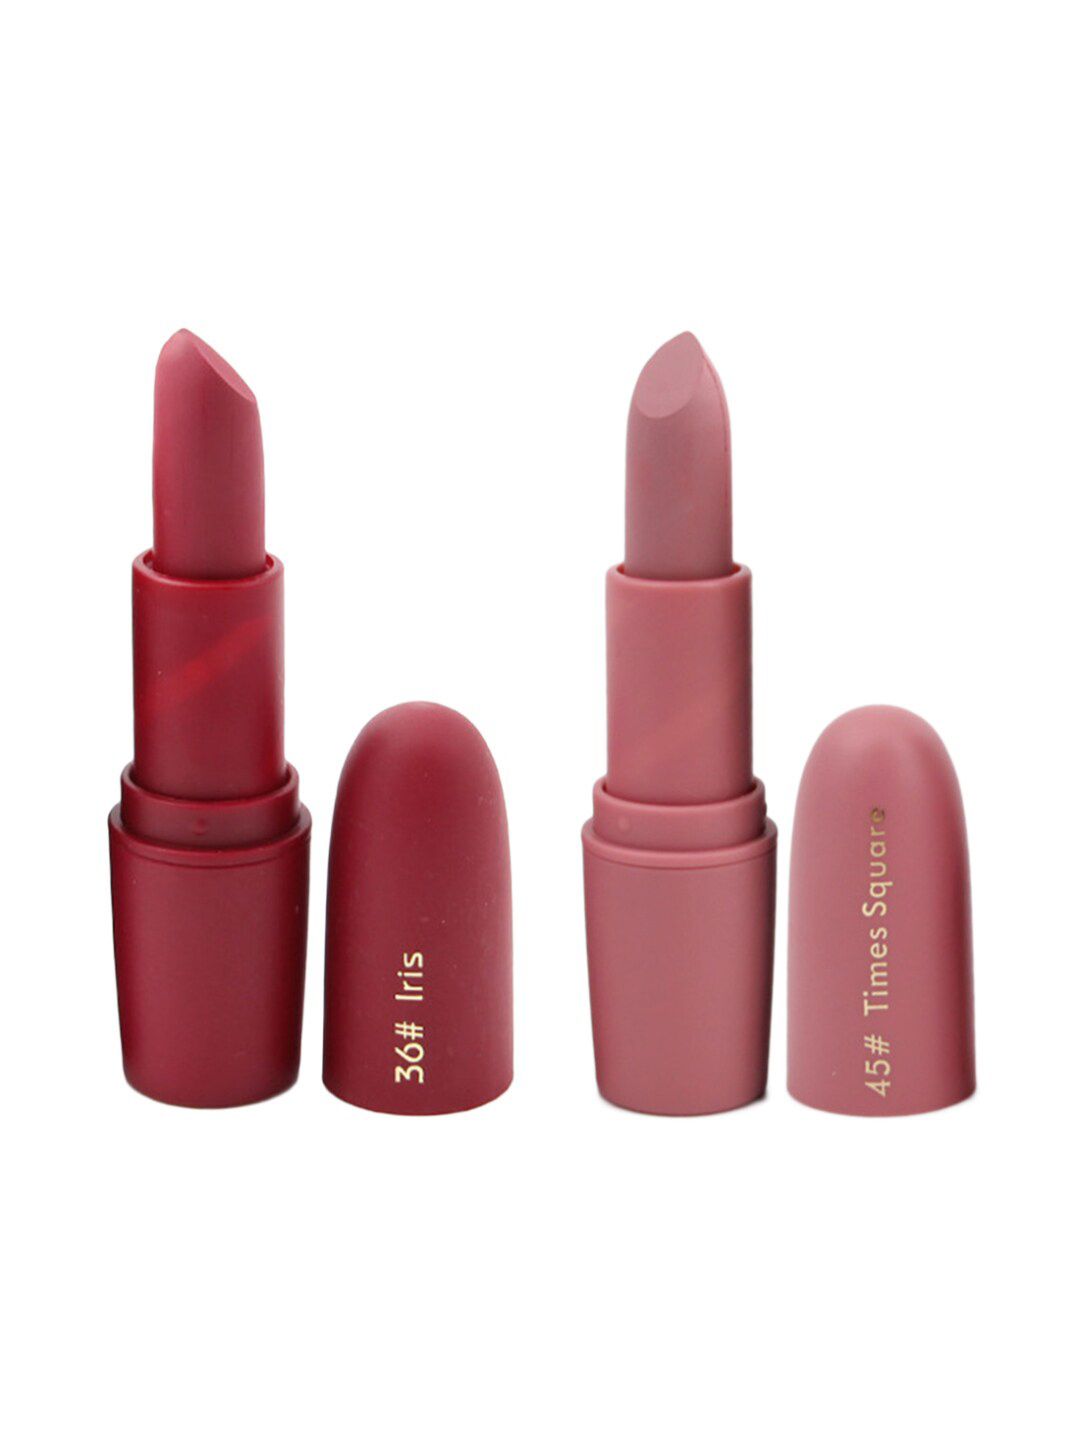 MISS ROSE Professional Make-Up Set of 2 Matte Creamy Lipsticks - Iris 36 & Times Square 45 Price in India